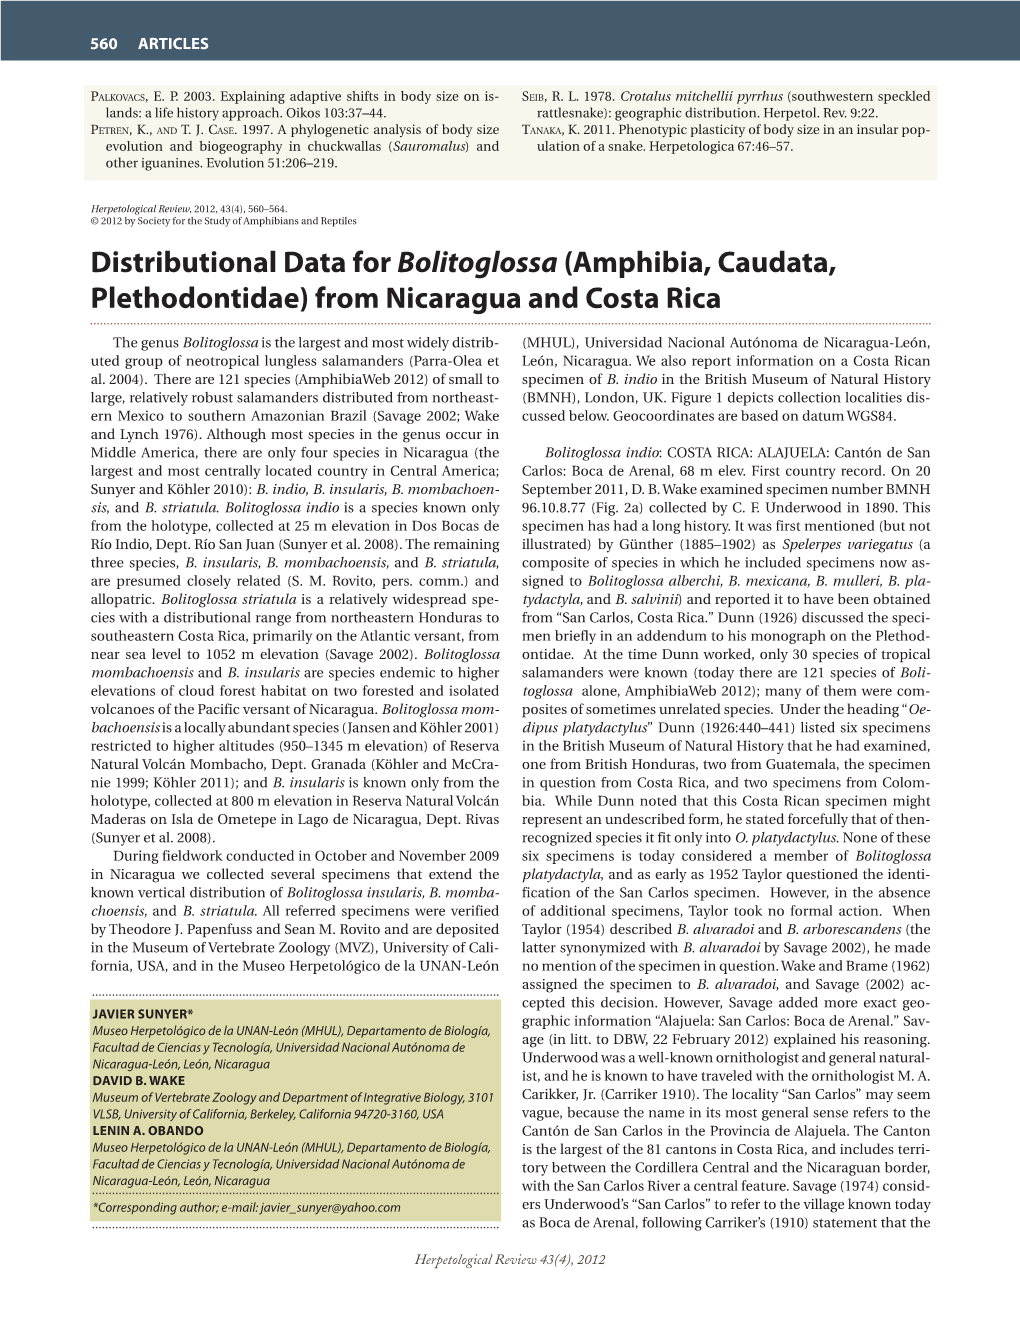 Distributional Data for Bolitoglossa (Amphibia, Caudata, Plethodontidae) from Nicaragua and Costa Rica